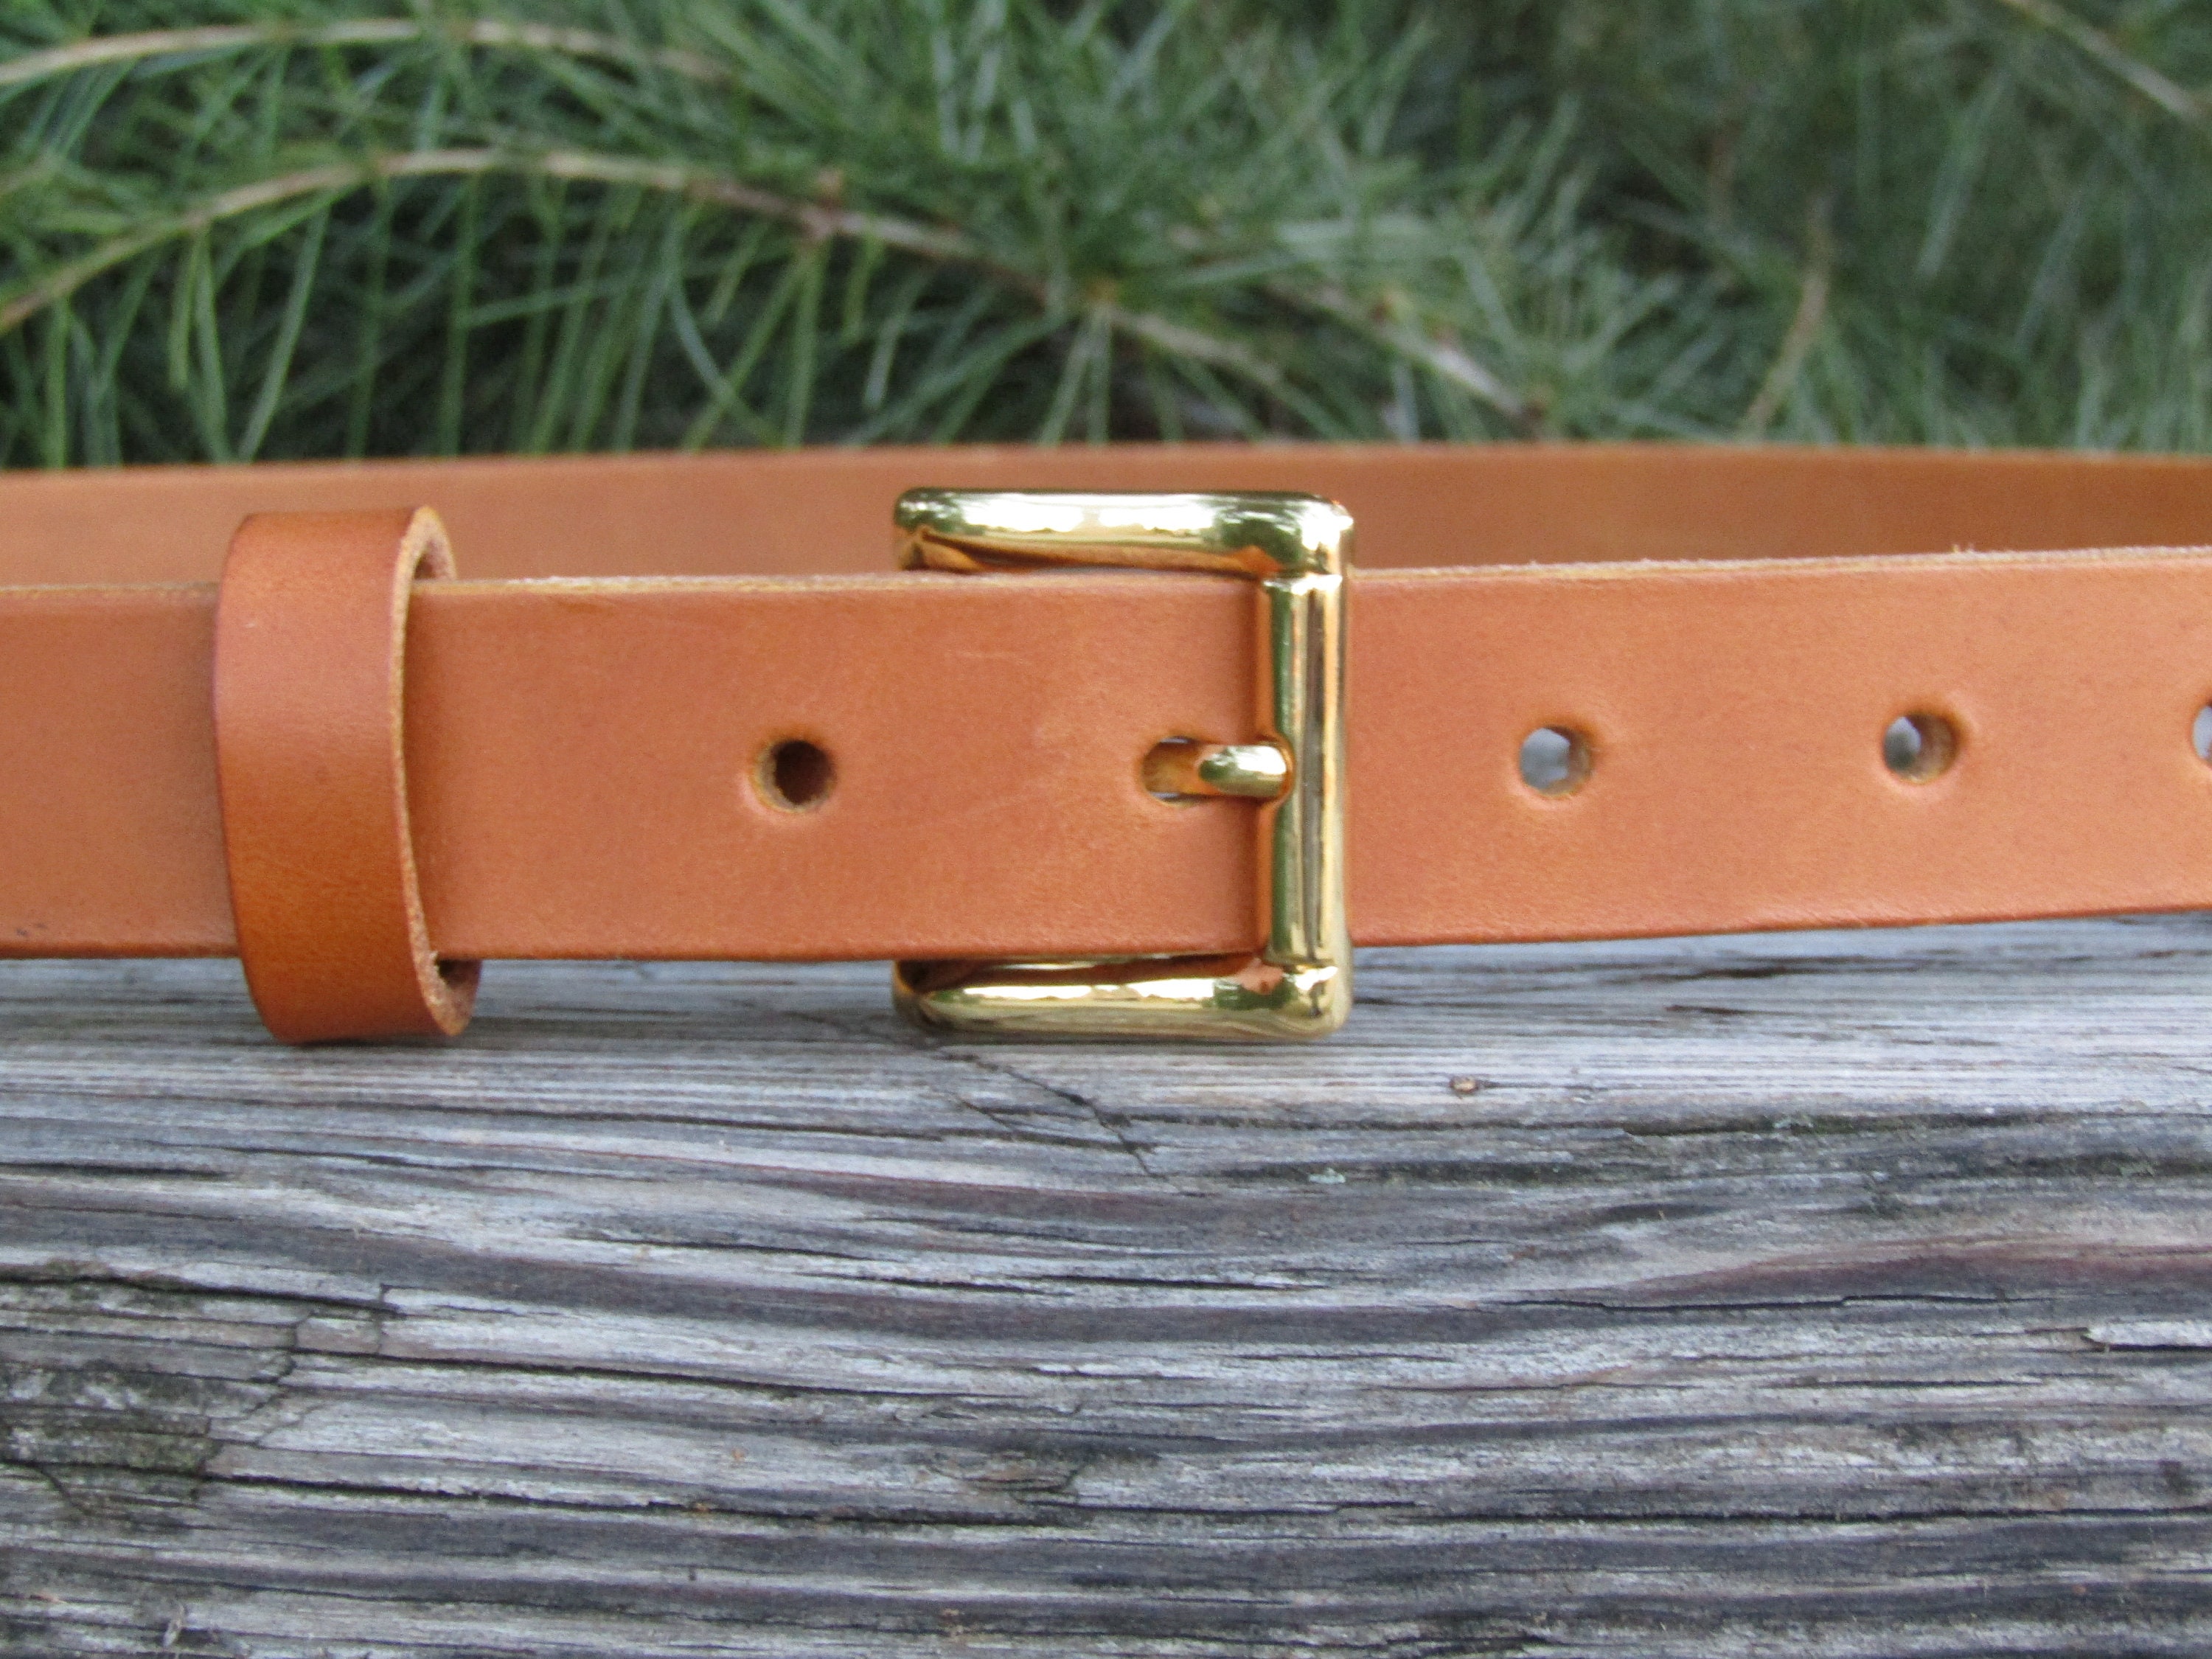 Brown Latigo Leather Belt